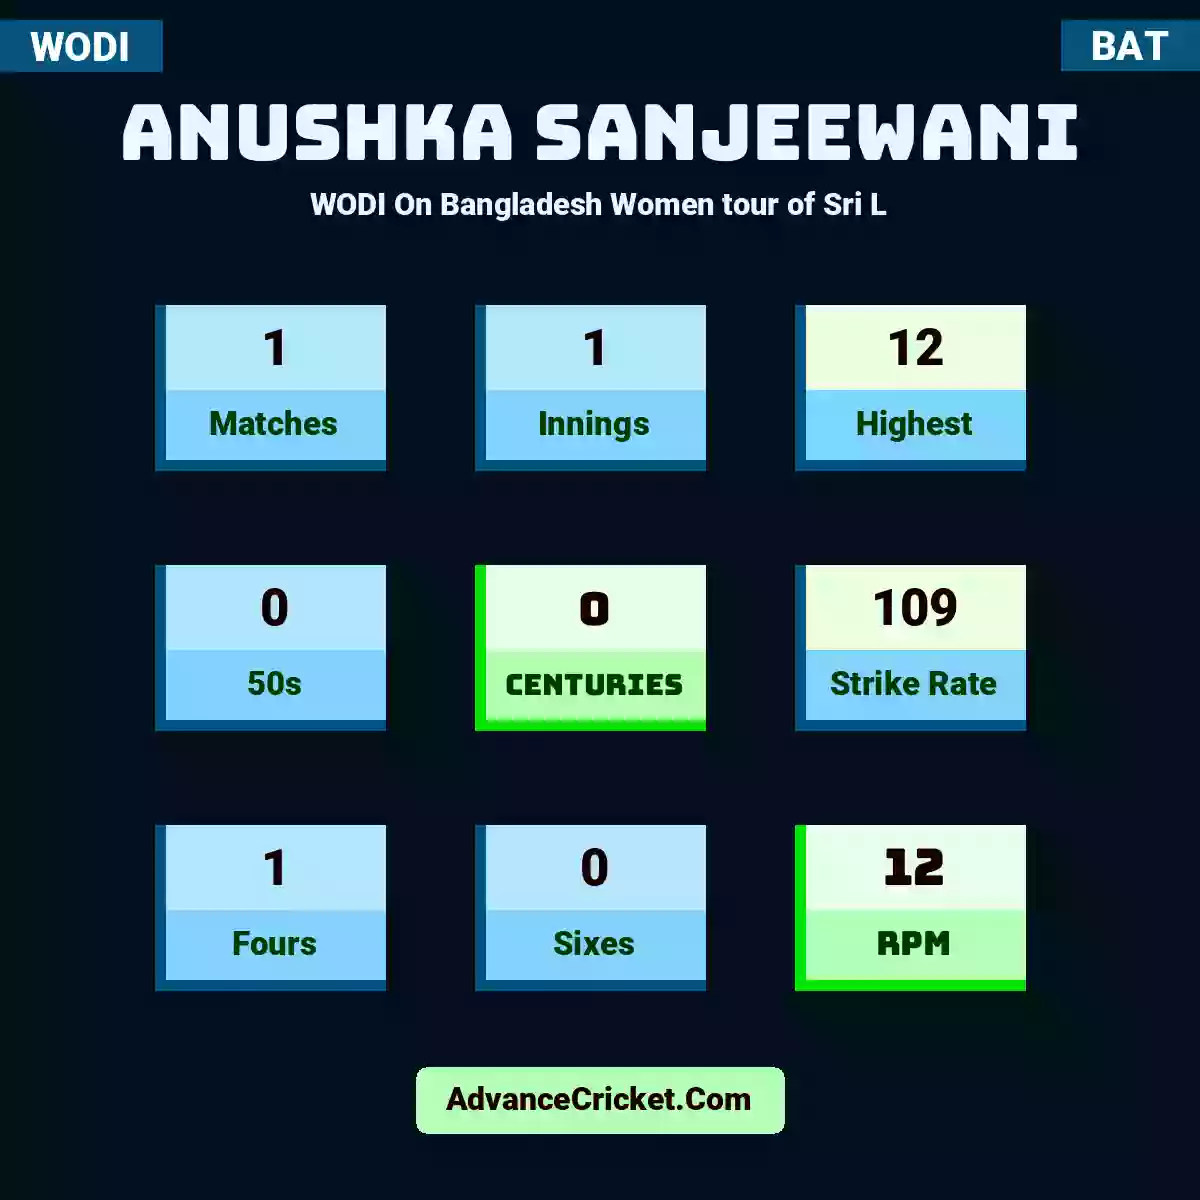 Anushka Sanjeewani WODI  On Bangladesh Women tour of Sri L, Anushka Sanjeewani played 1 matches, scored 12 runs as highest, 0 half-centuries, and 0 centuries, with a strike rate of 109. A.Sanjeewani hit 1 fours and 0 sixes, with an RPM of 12.